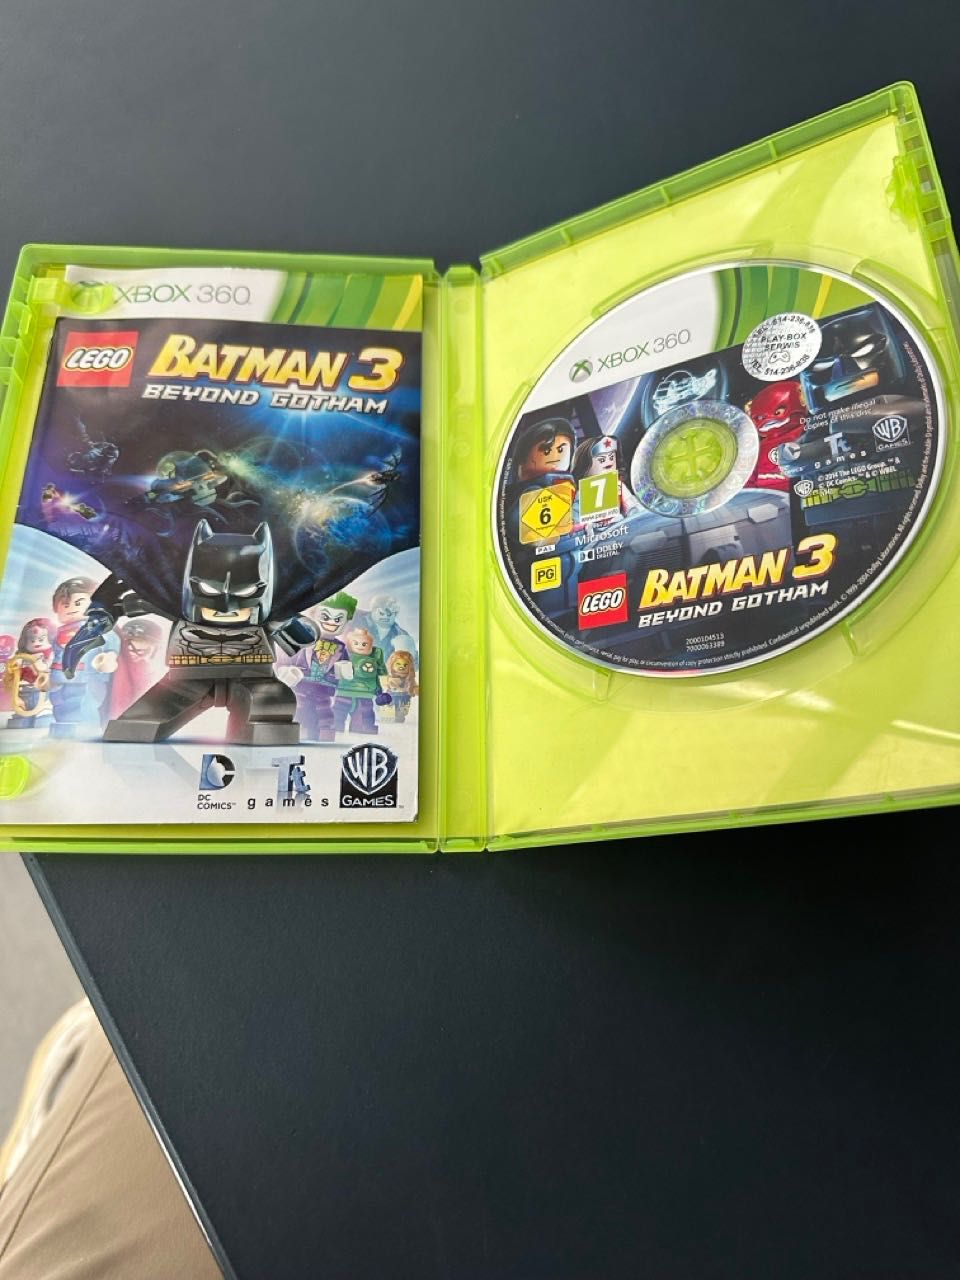 LEGO Batman 3 Poza Gotham xbox360